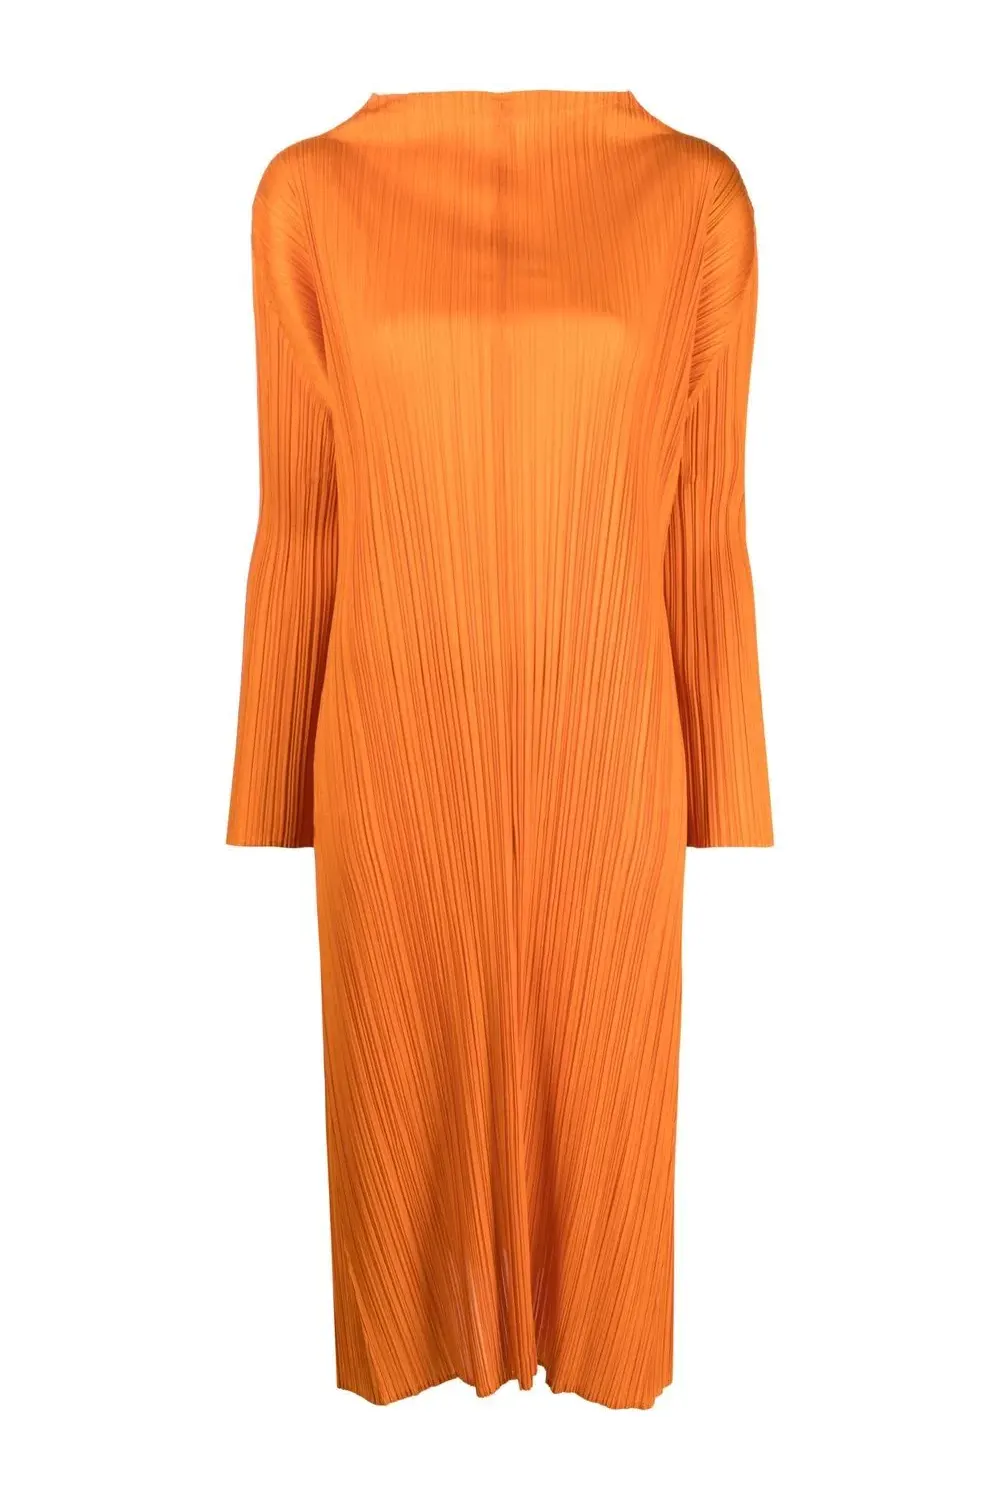 Pleated dress, dark orange